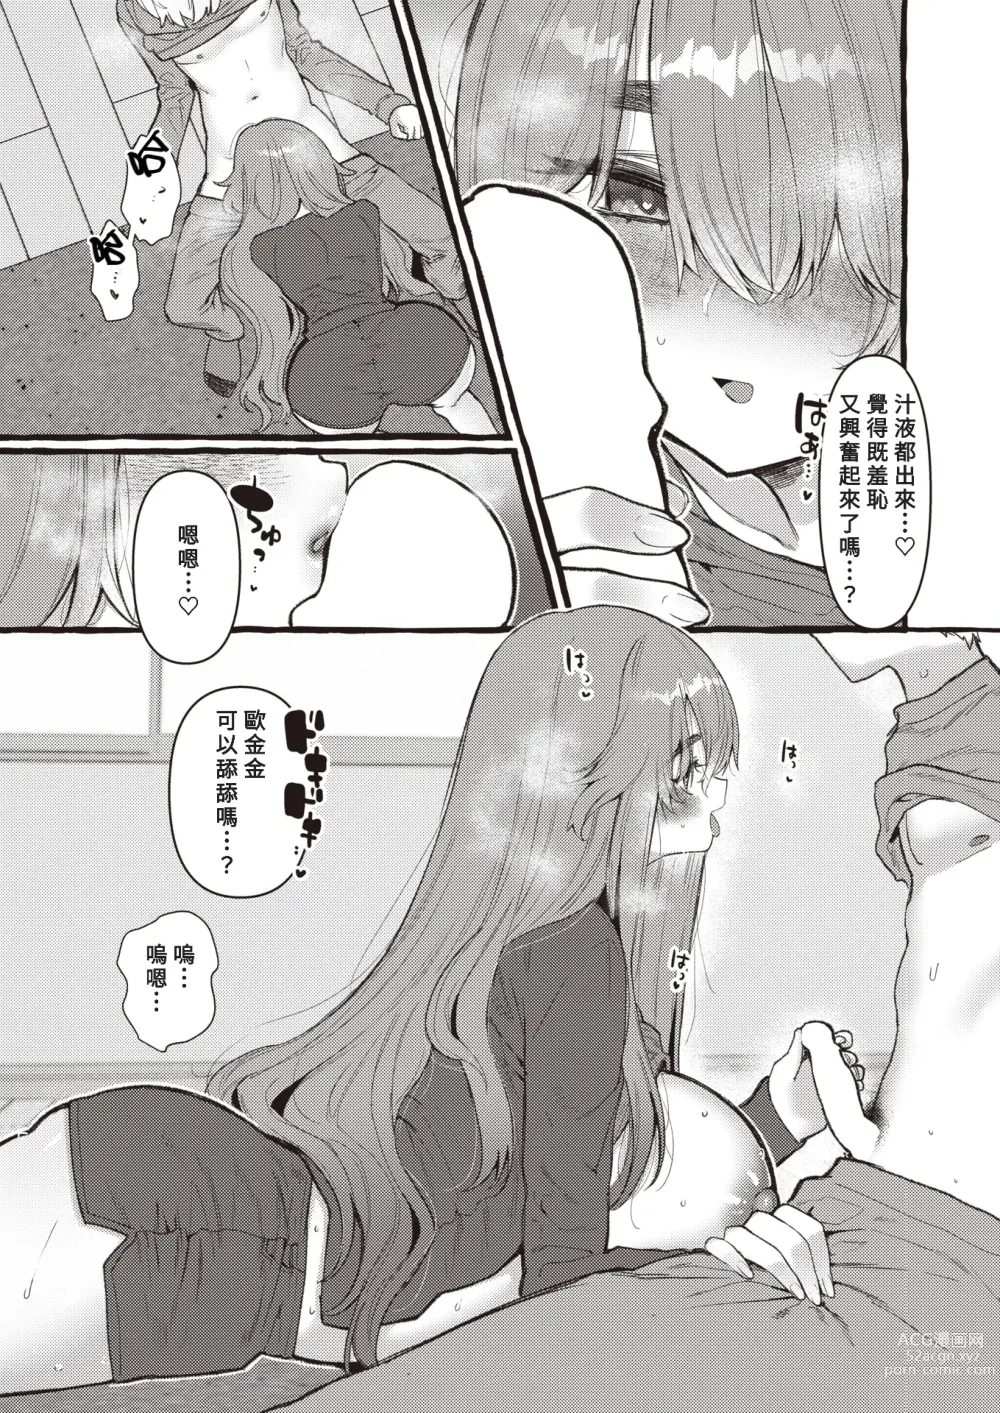 Page 17 of manga ZOO-Kei Joshi@ karasu